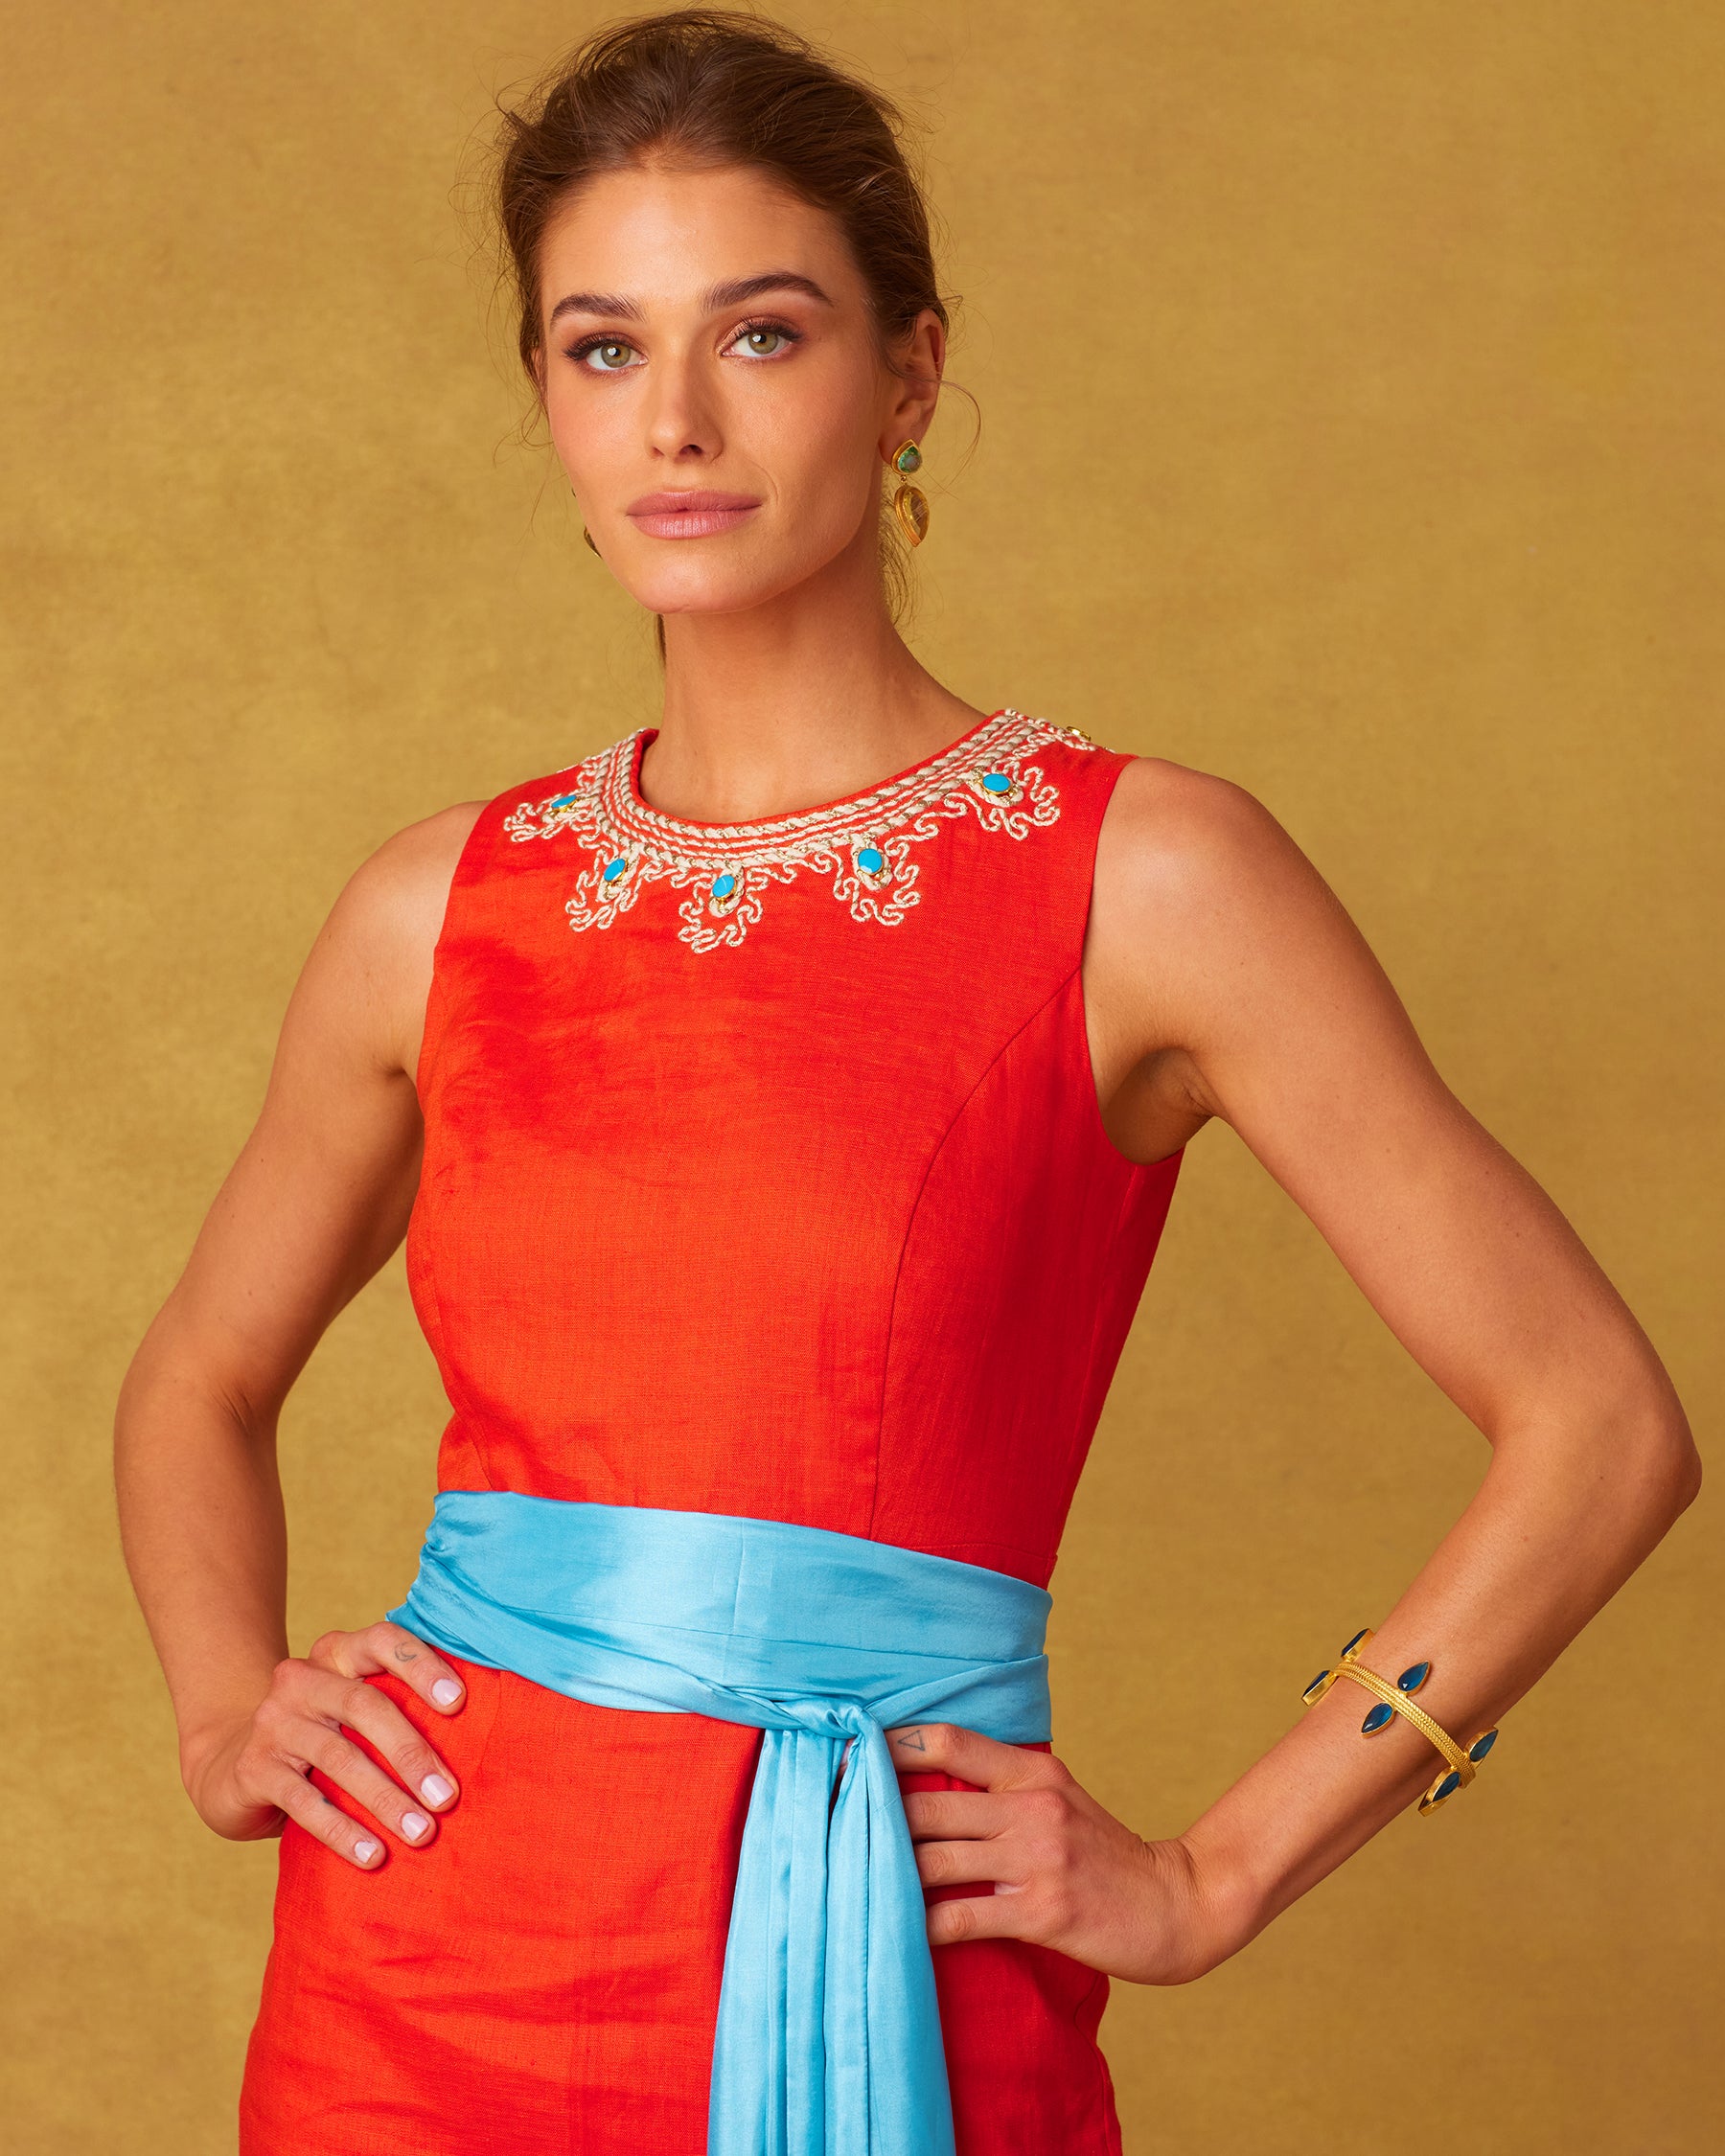 Adriana Sheath Dress in Coral Orange Linen and Gold Embellishment